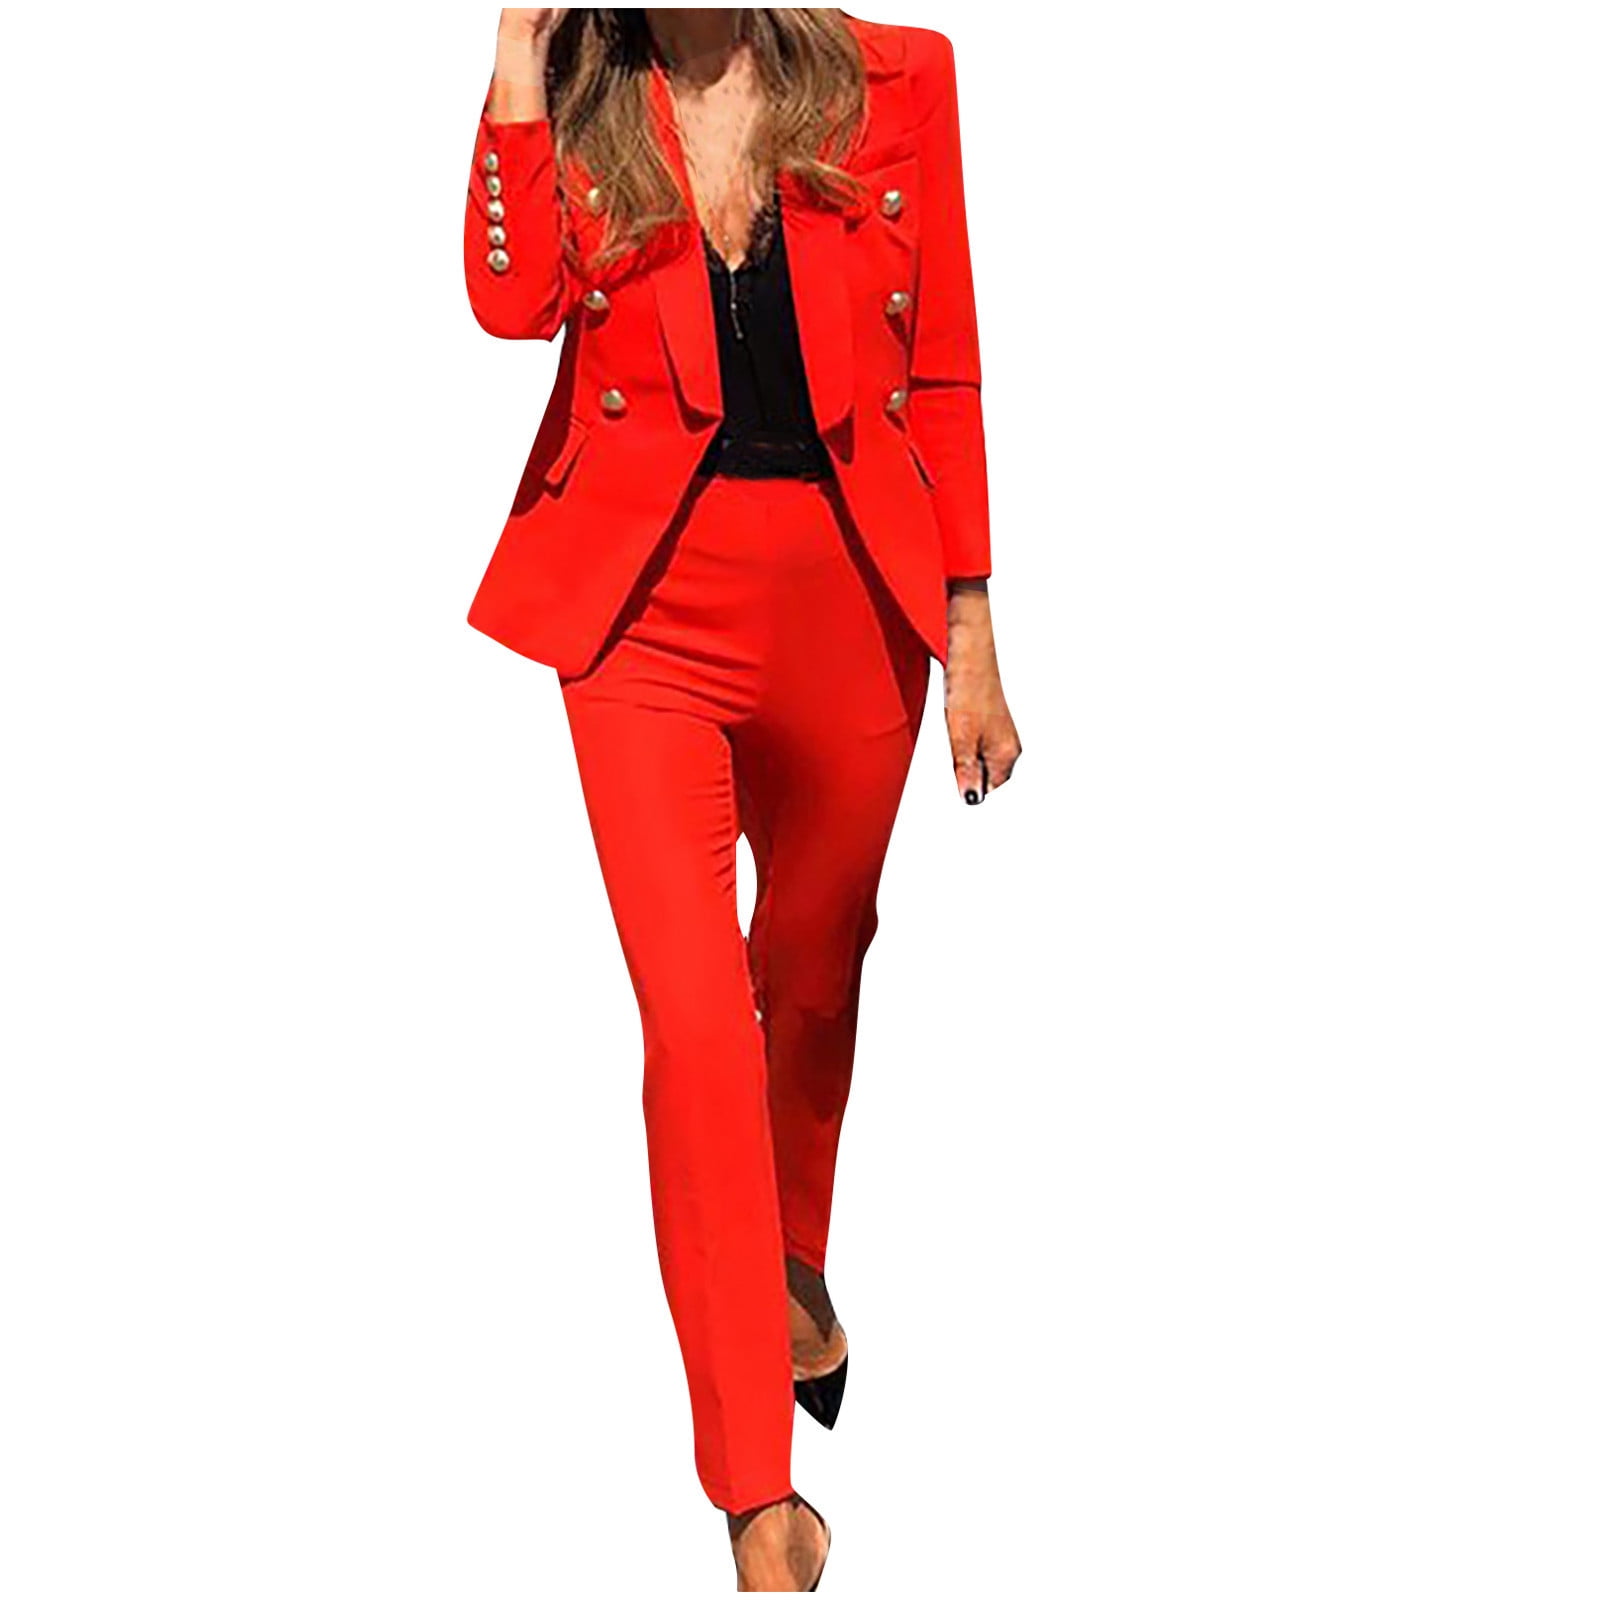 Xysaqa Women's Classic Fit Business Blazer Pant Suit Set for Work